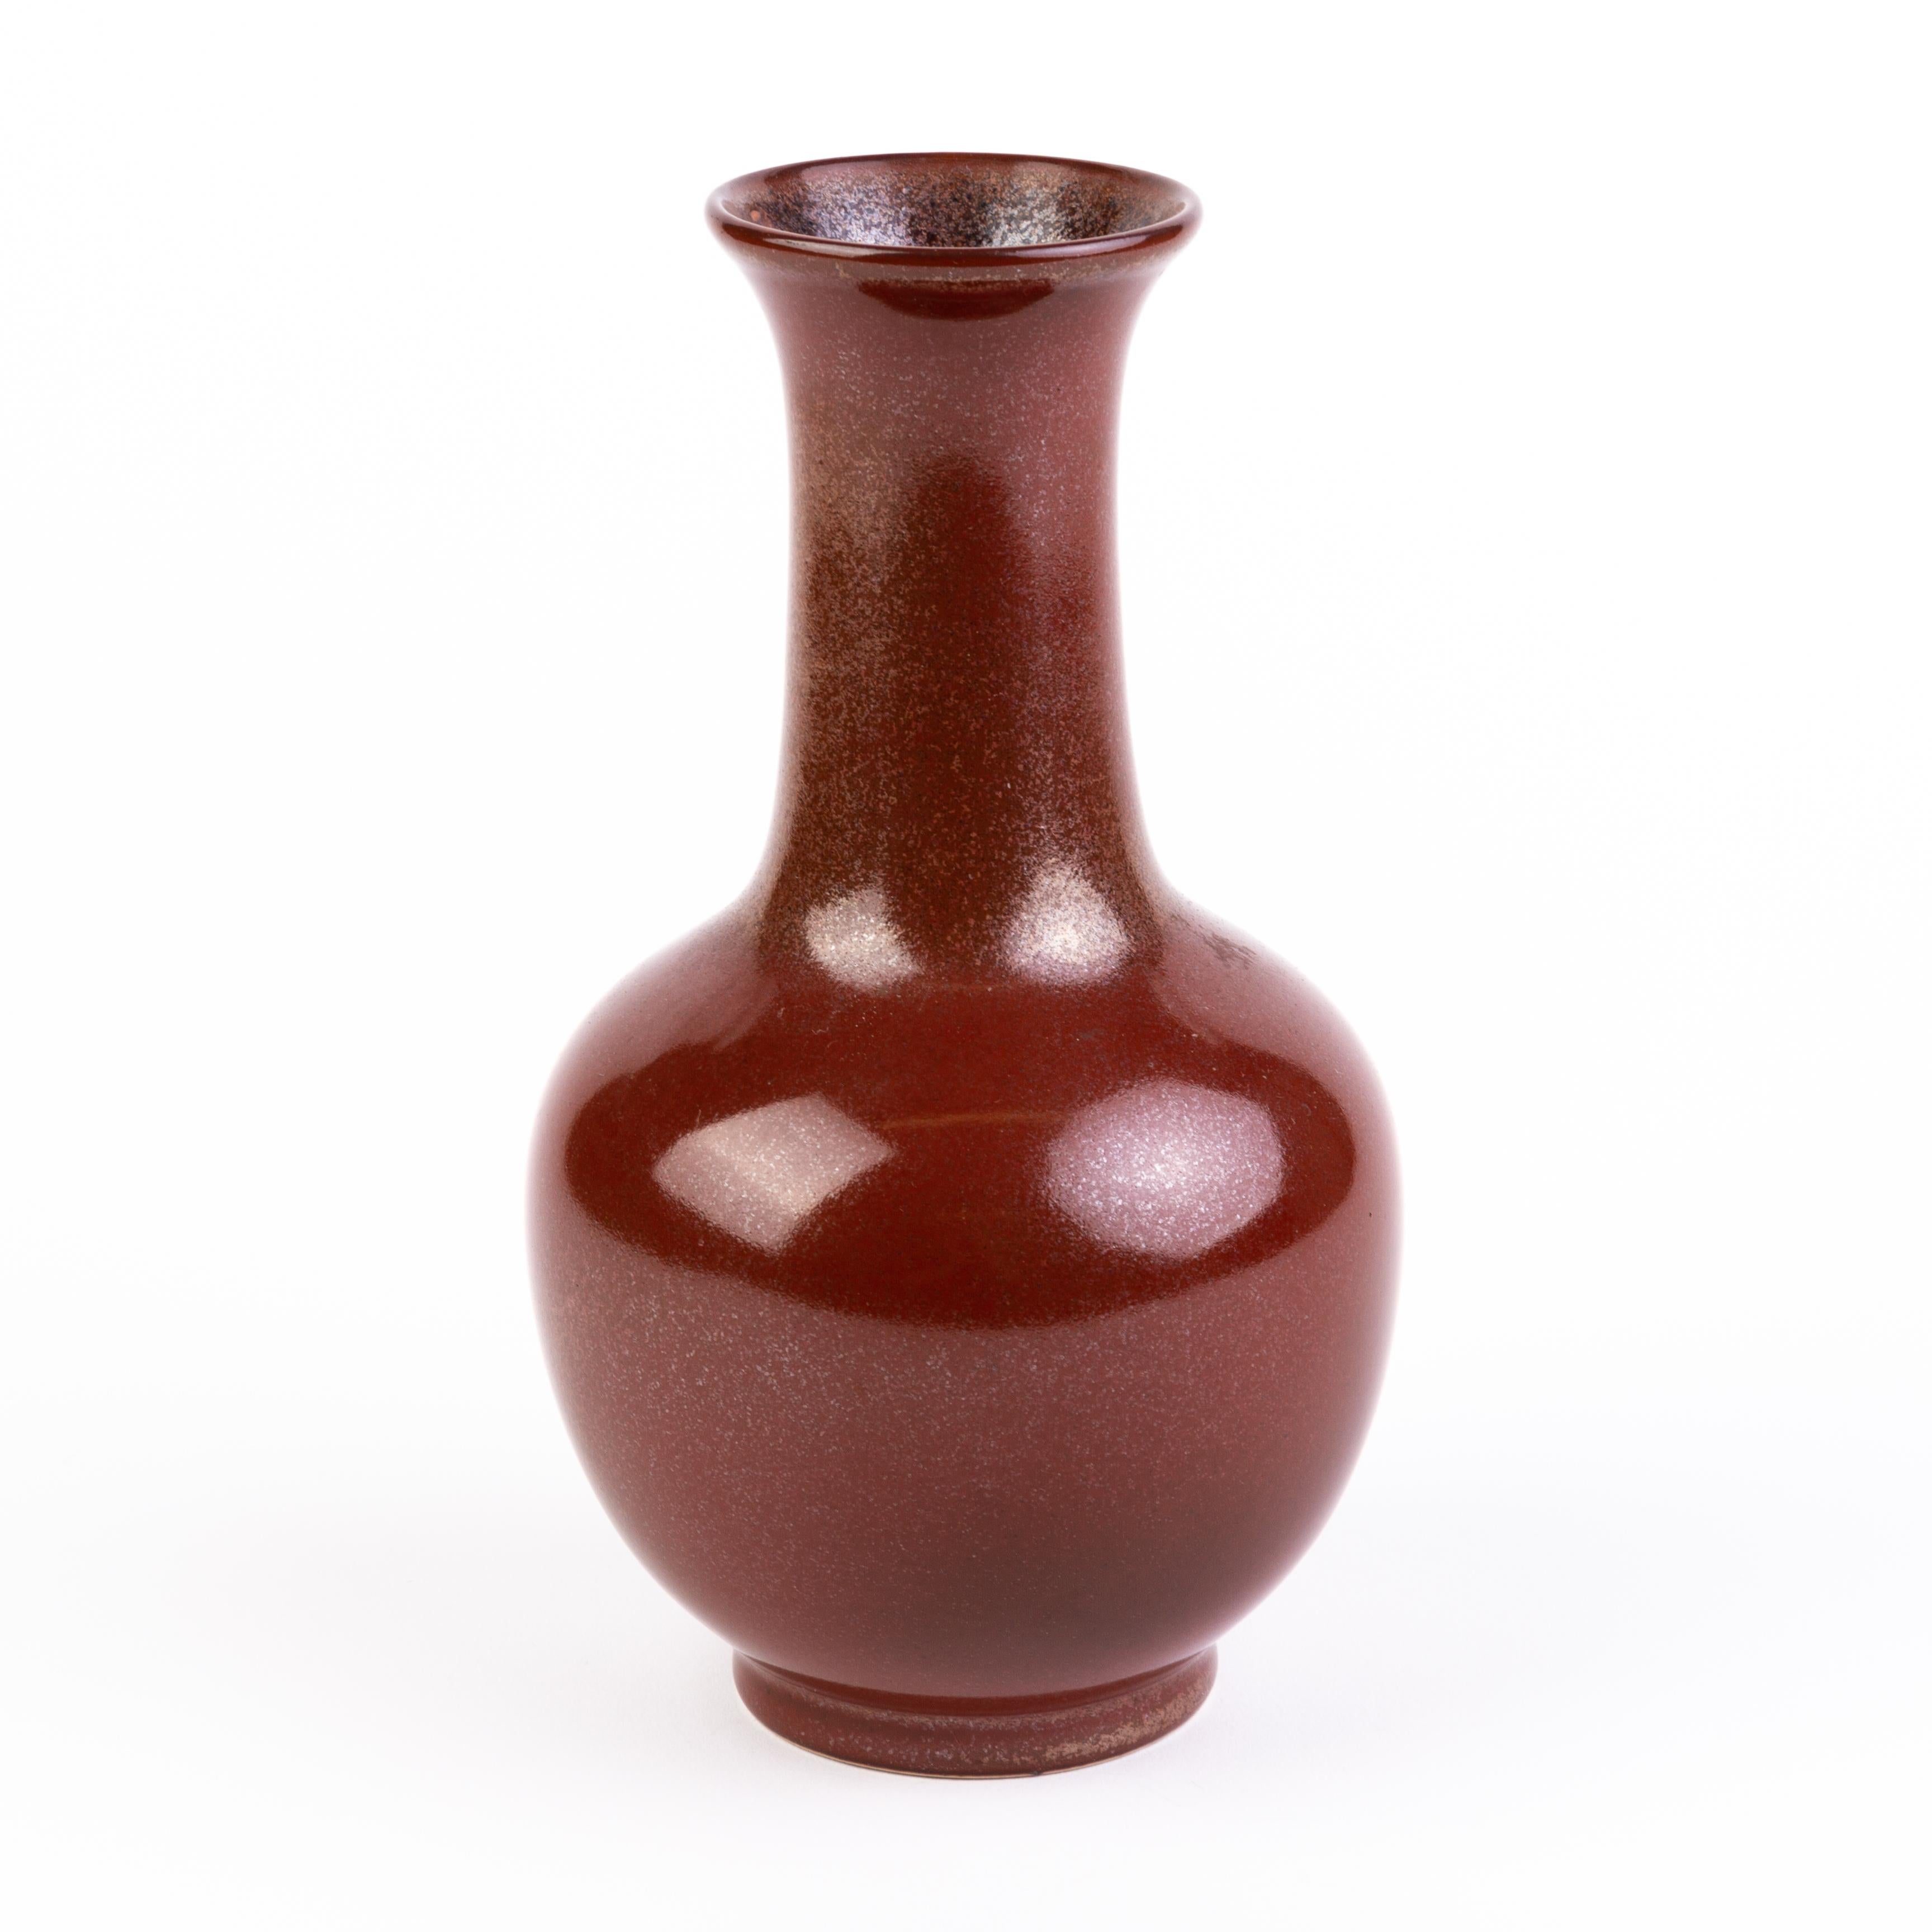 Chinese Sang de Boeuf Bottle Baluster Vase
Good condition 
Free international shipping.